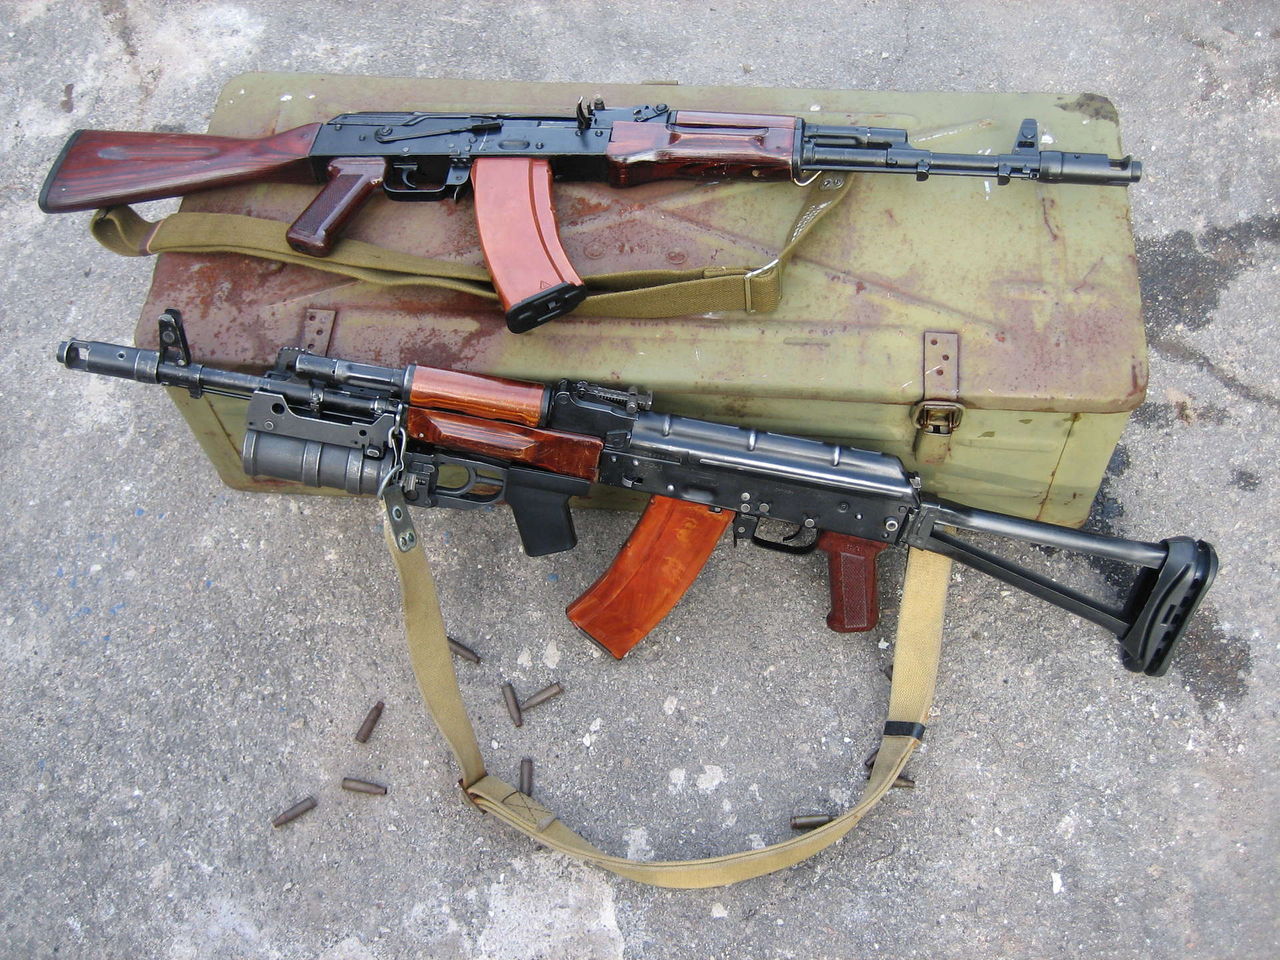 JSC Kalashnikov Concern Brags About Making More Weapons, But russians Shouldn’t Be Very Happy, Defense Express, war in Ukraine, Russian-Ukrainian war